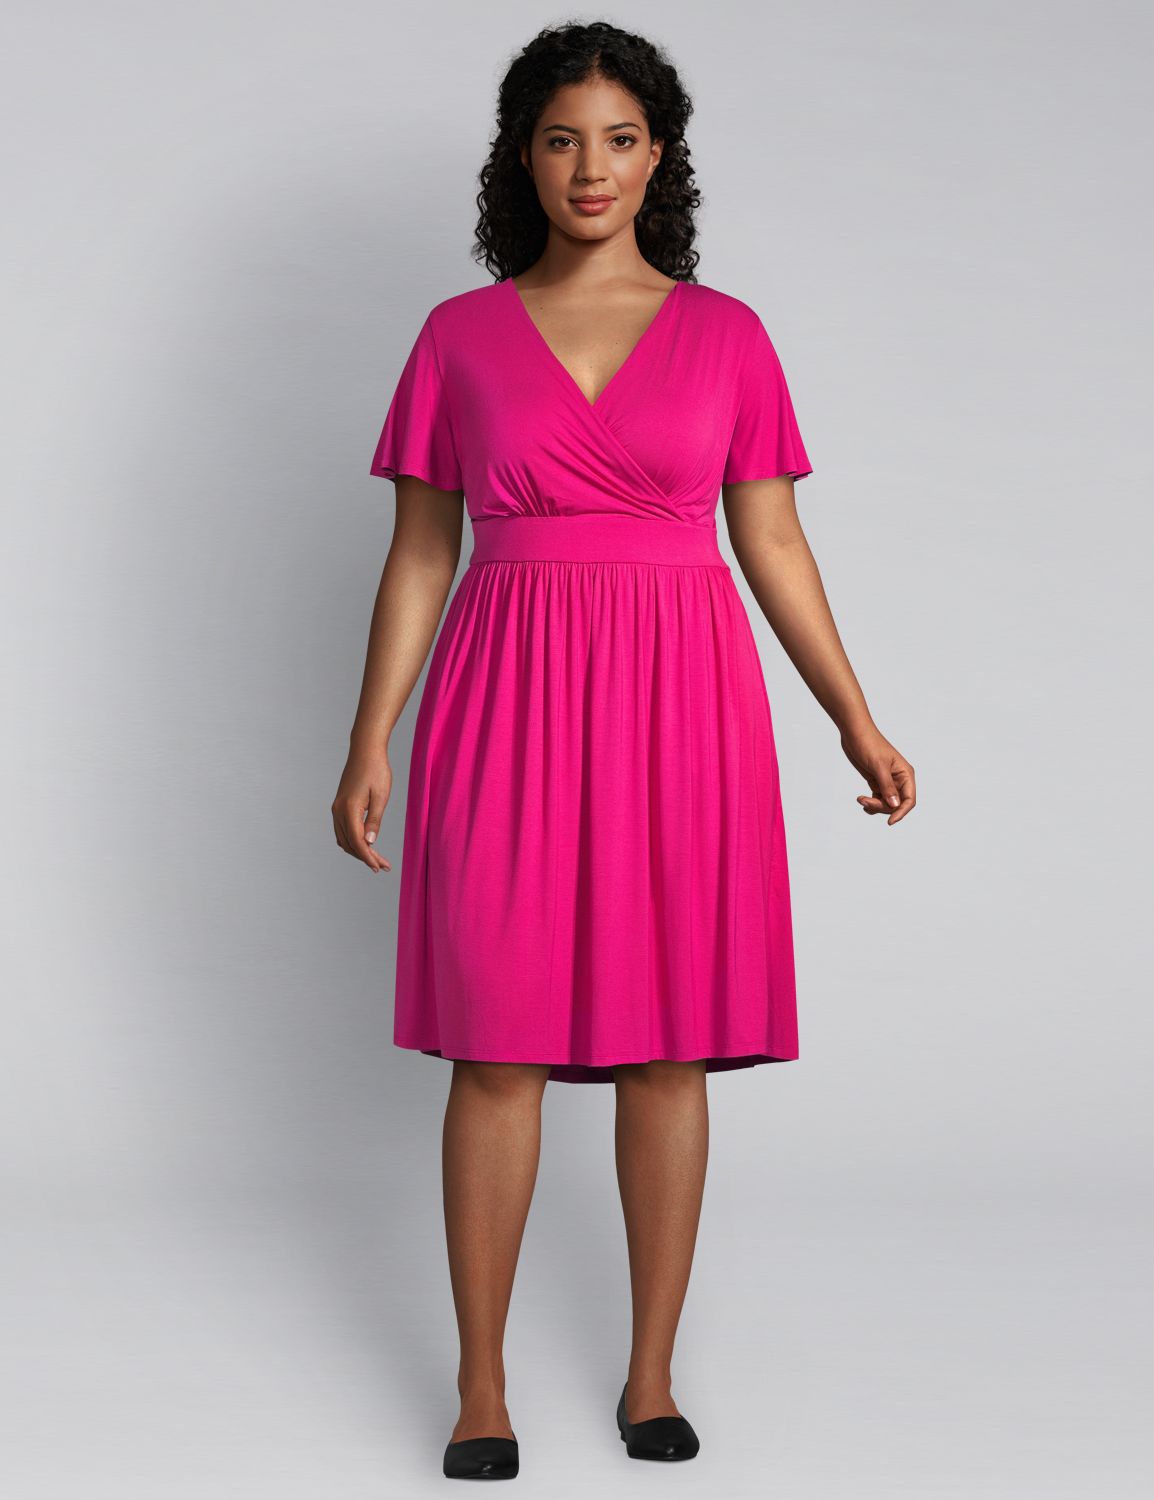 lane bryant pink dress